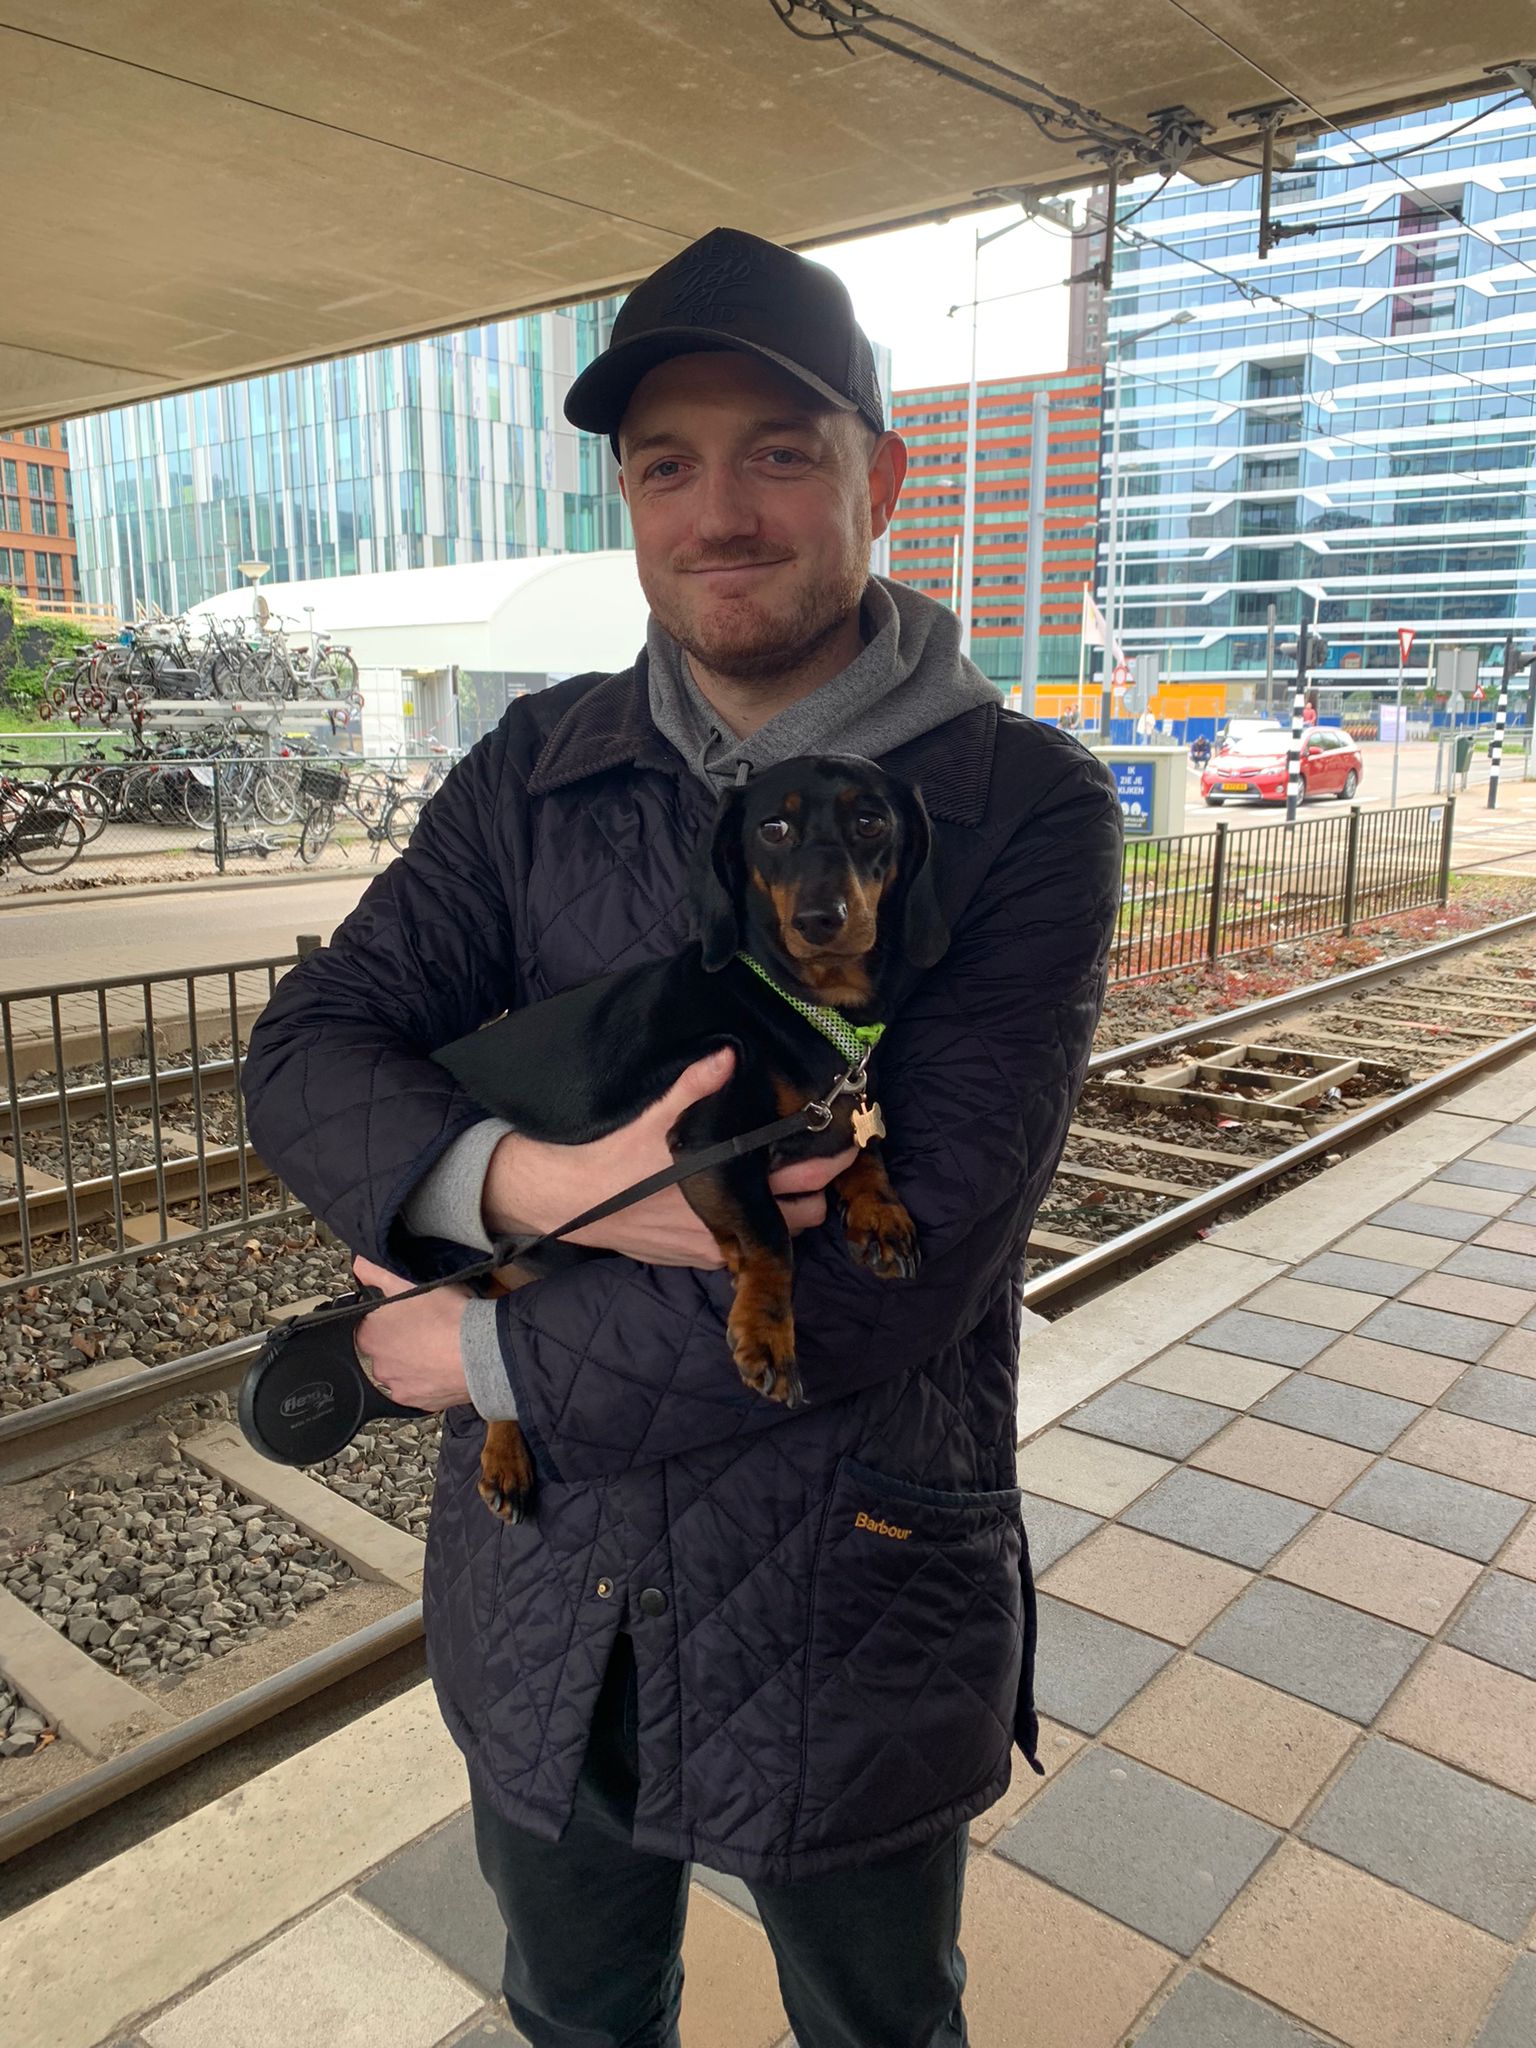 Man holding dog at train station